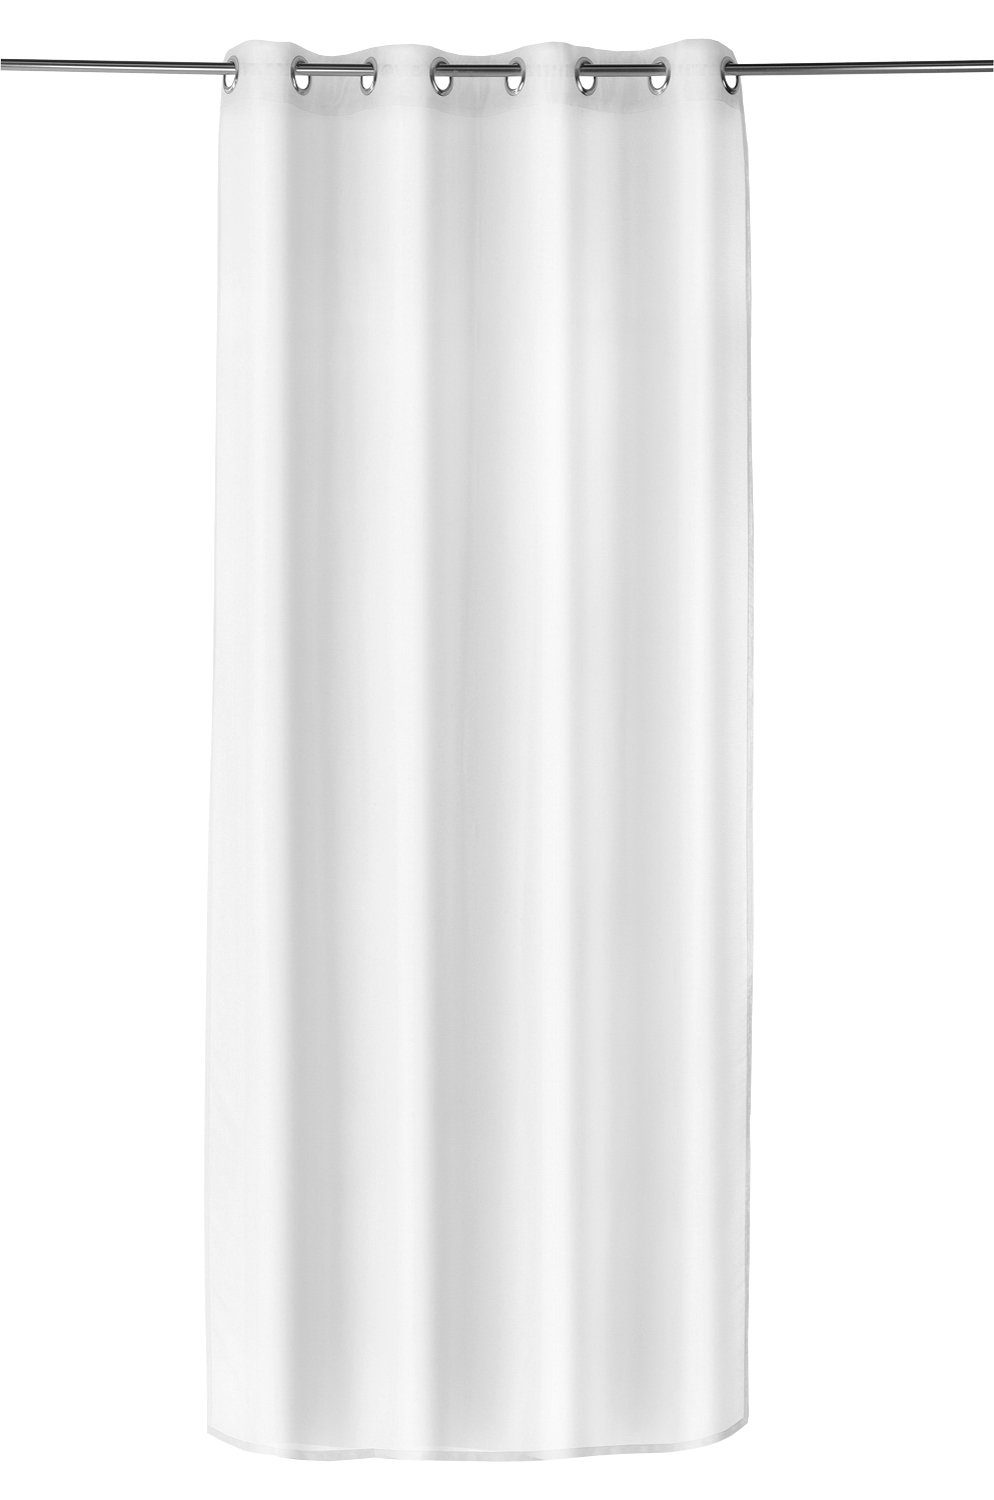 Vorhang KAYLA, Ösenvorhang, Weiß, L 245 cm x B 140 cm, Home4You, Ösen, halbtransparent | Fertiggardinen